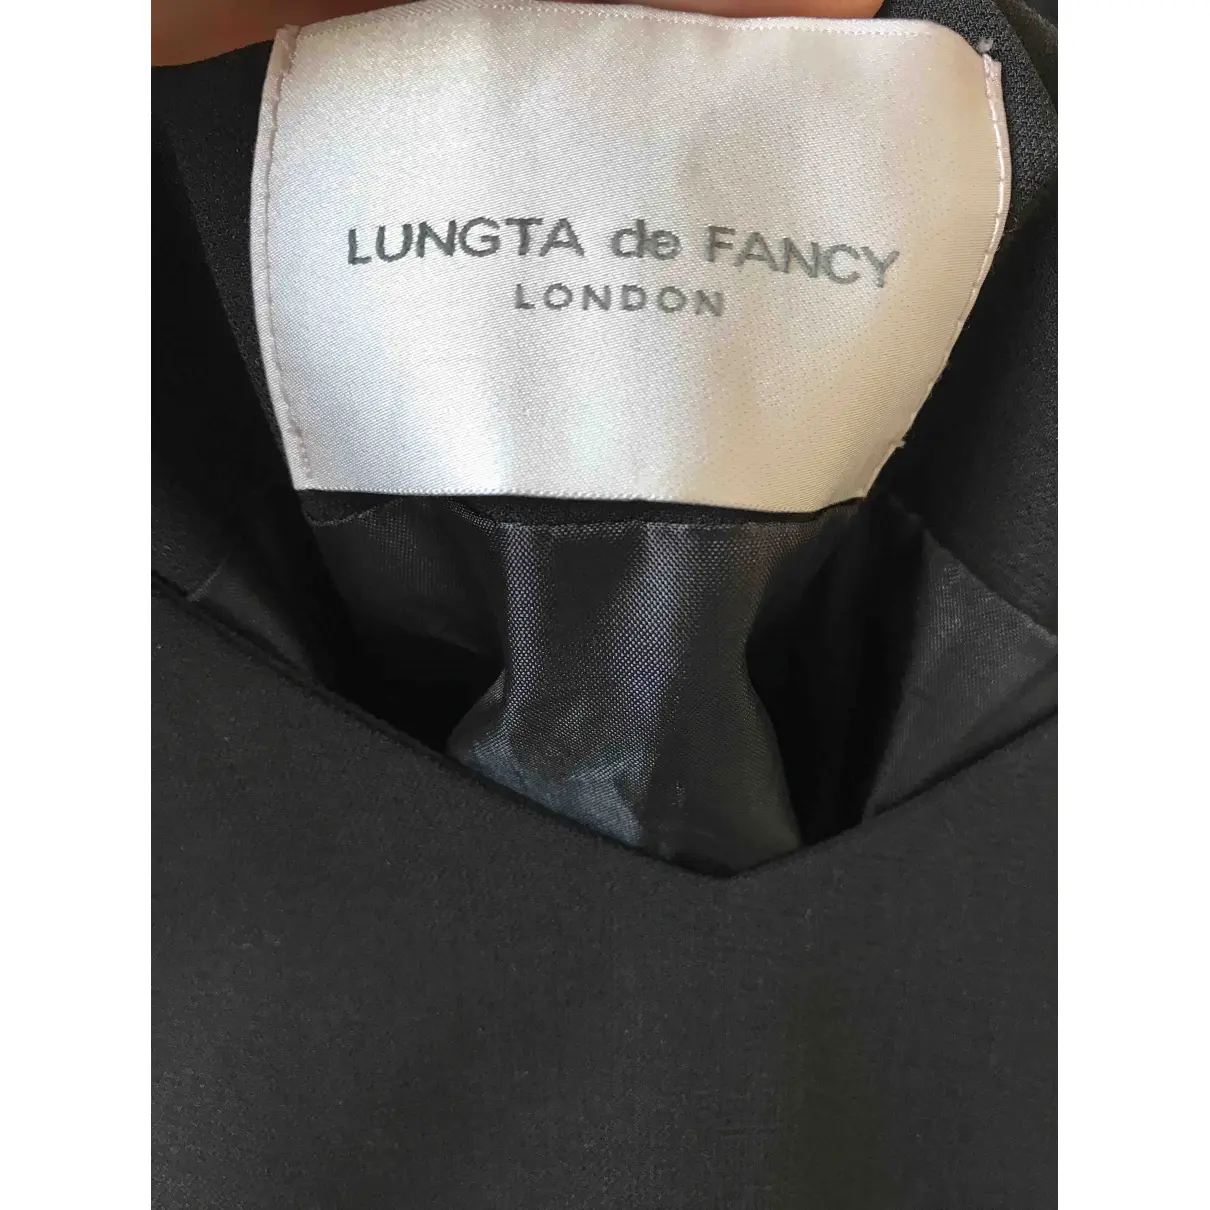 Buy Lungta De Fancy Mid-length dress online